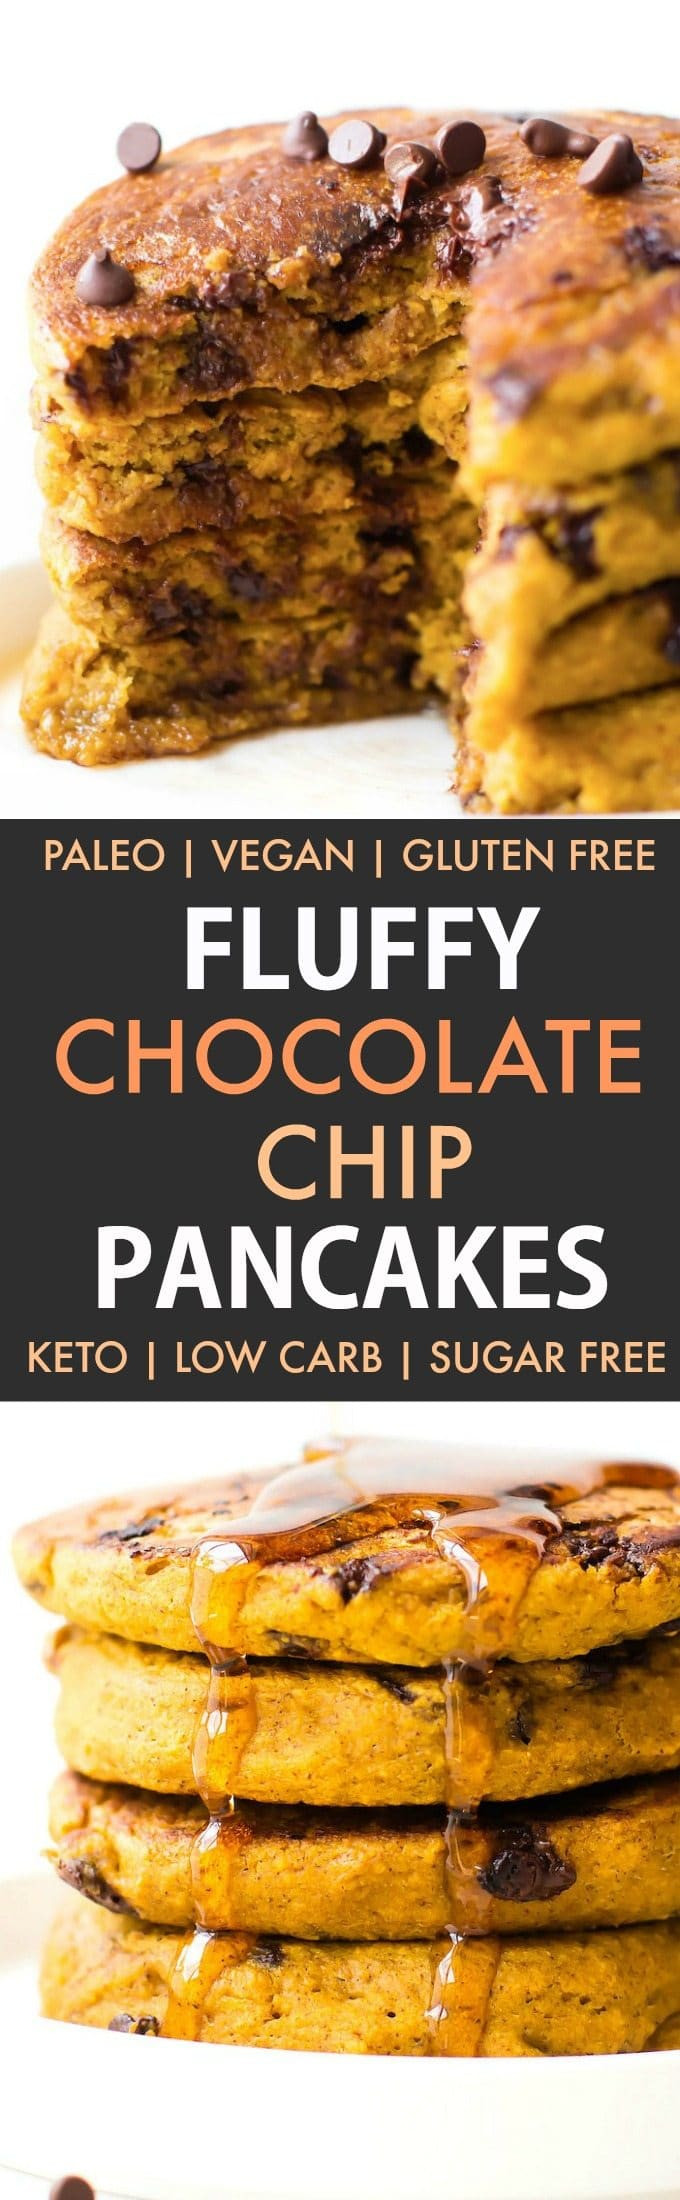 Keto Connect Pancakes
 Fluffy Low Carb Keto Chocolate Chip Pancakes Paleo Vegan